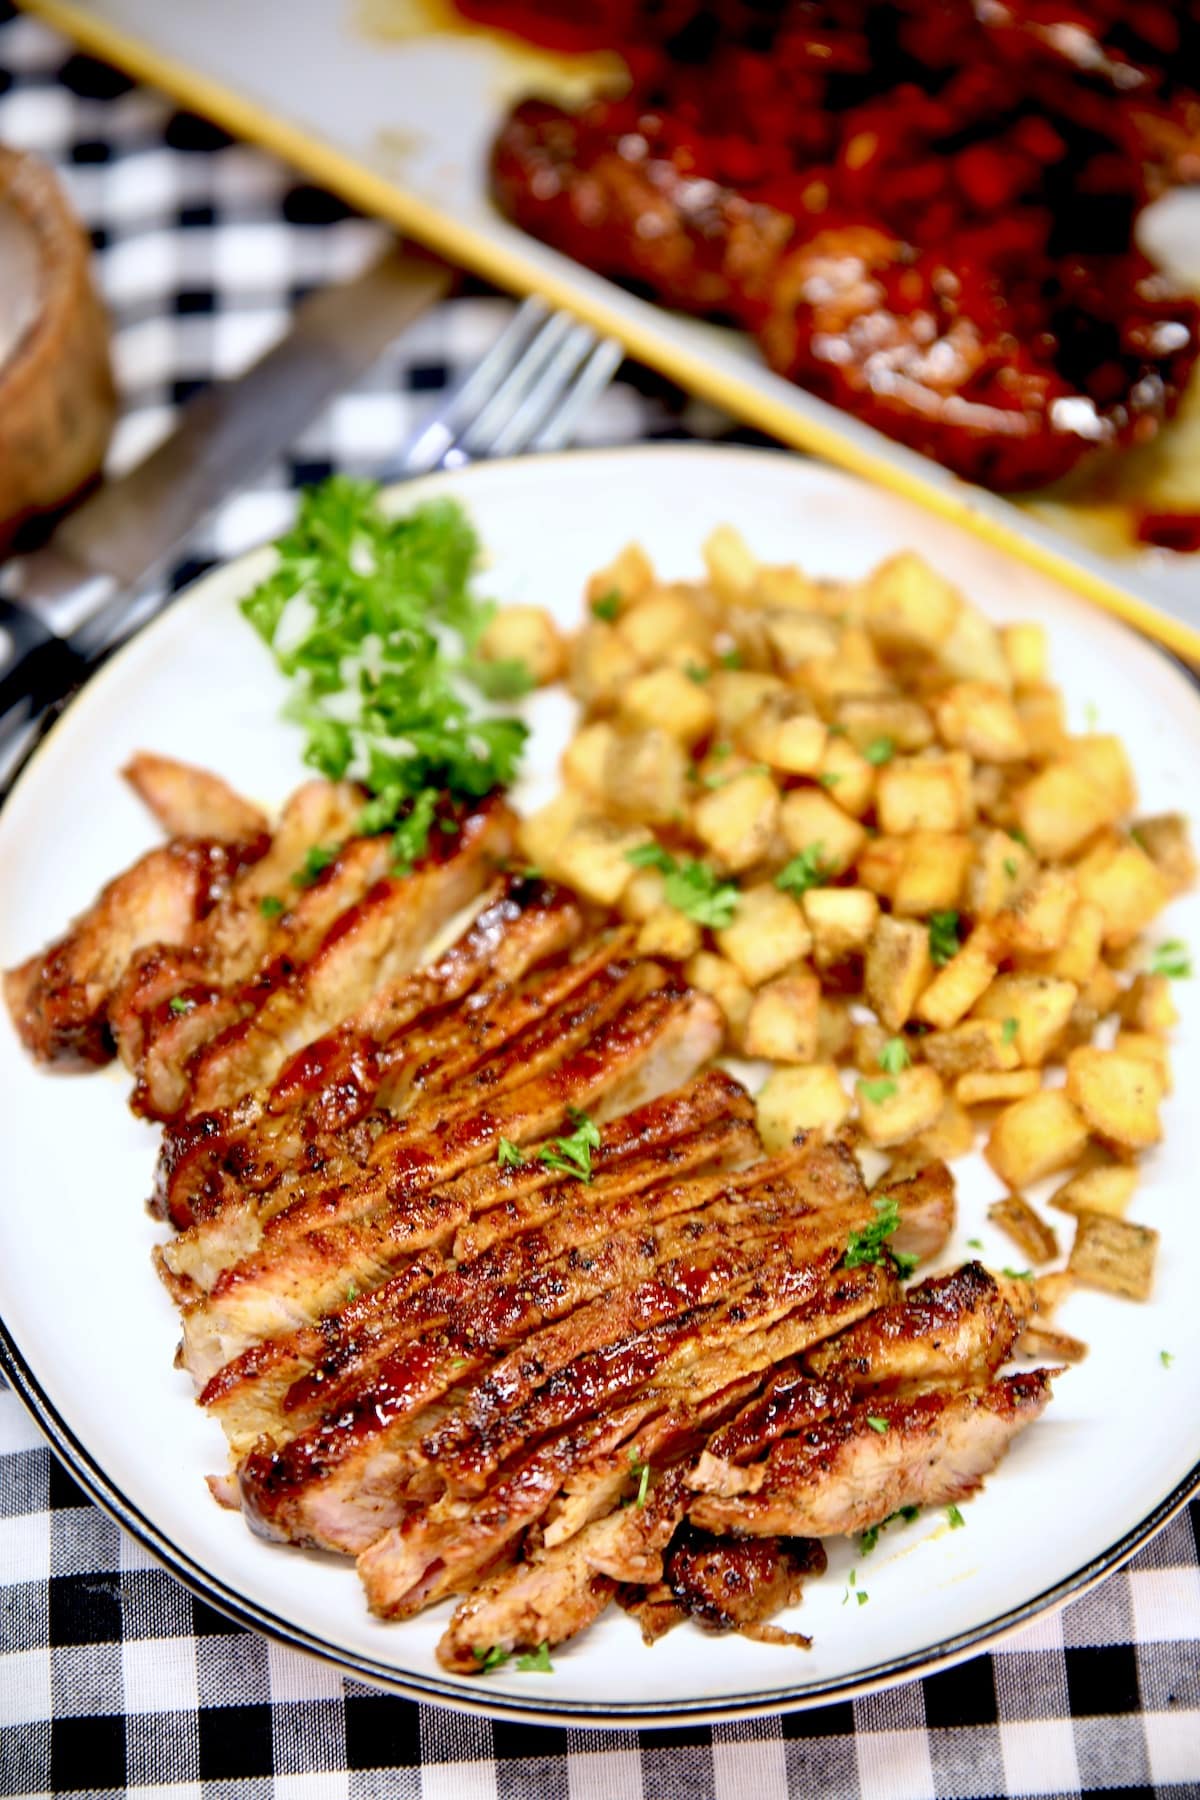 Plate with sliced pork chop, potatoes.